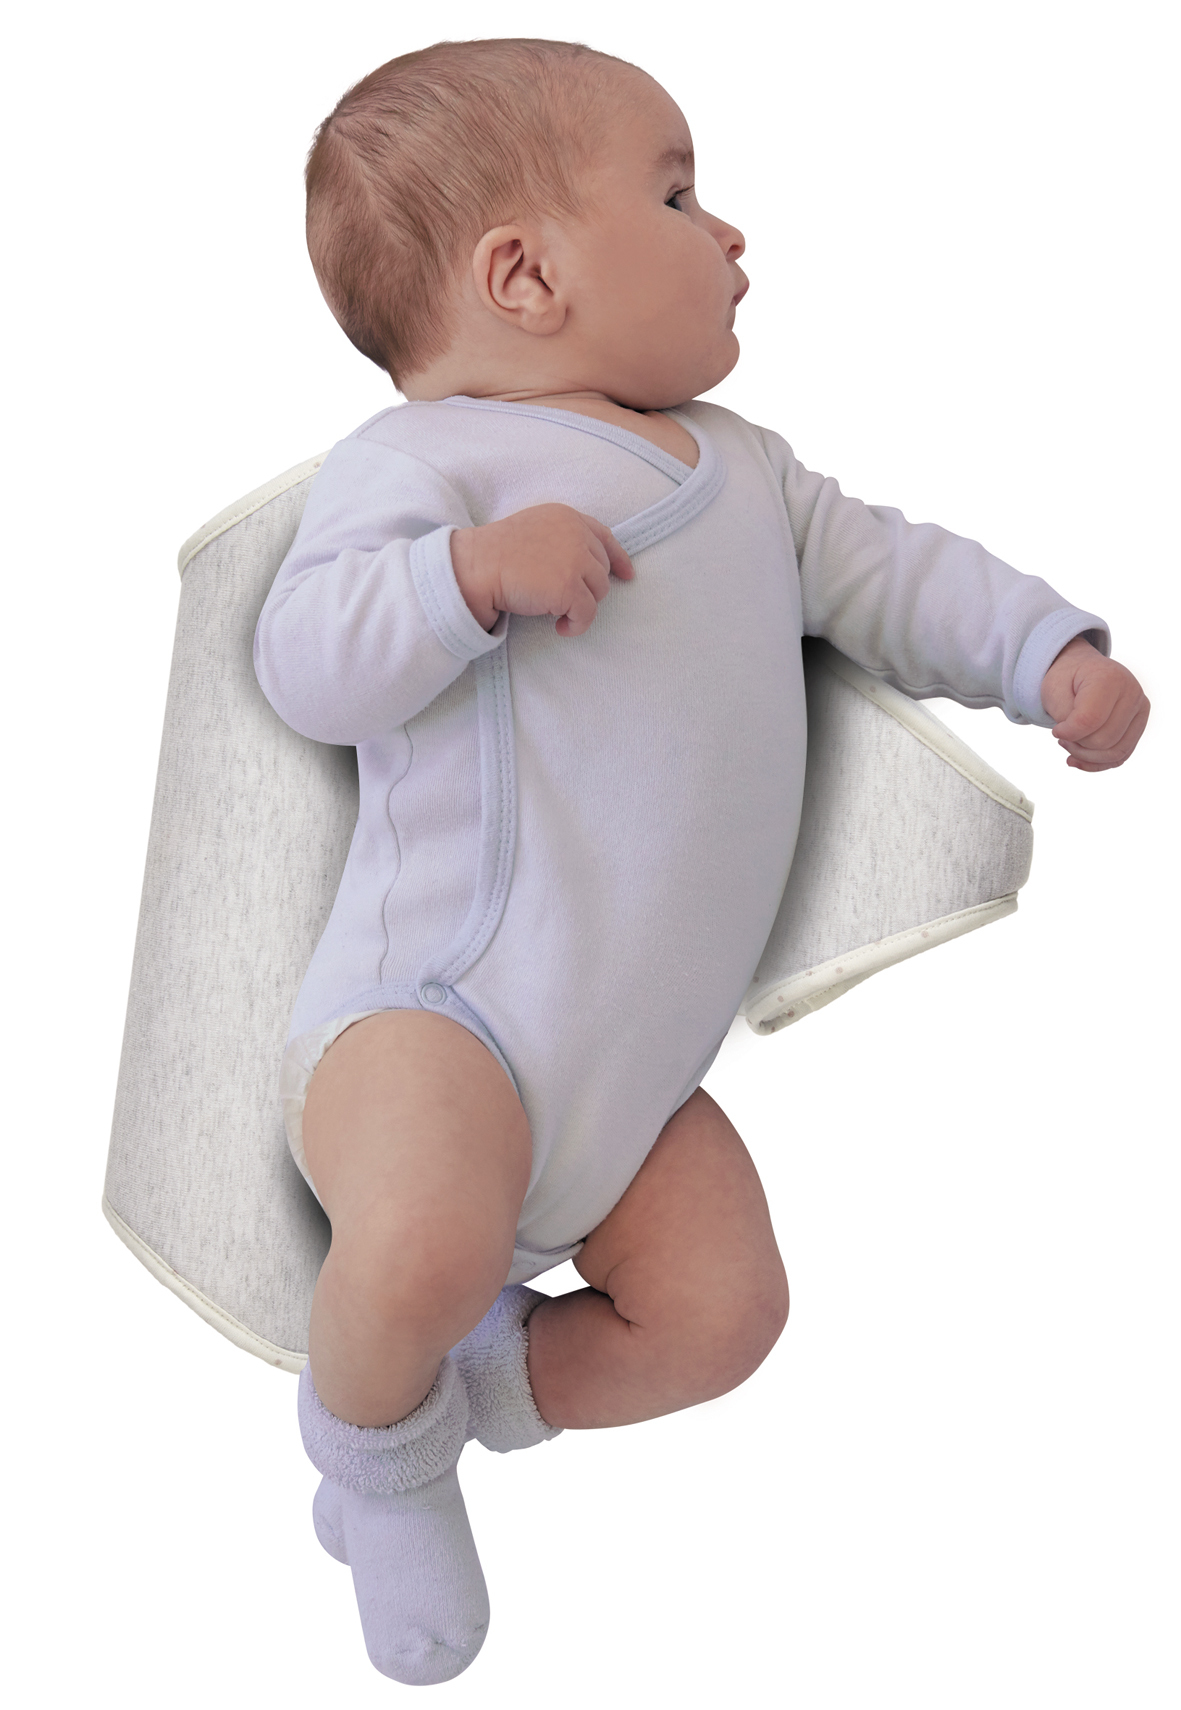 Cale-bébé ergonomique - Candide